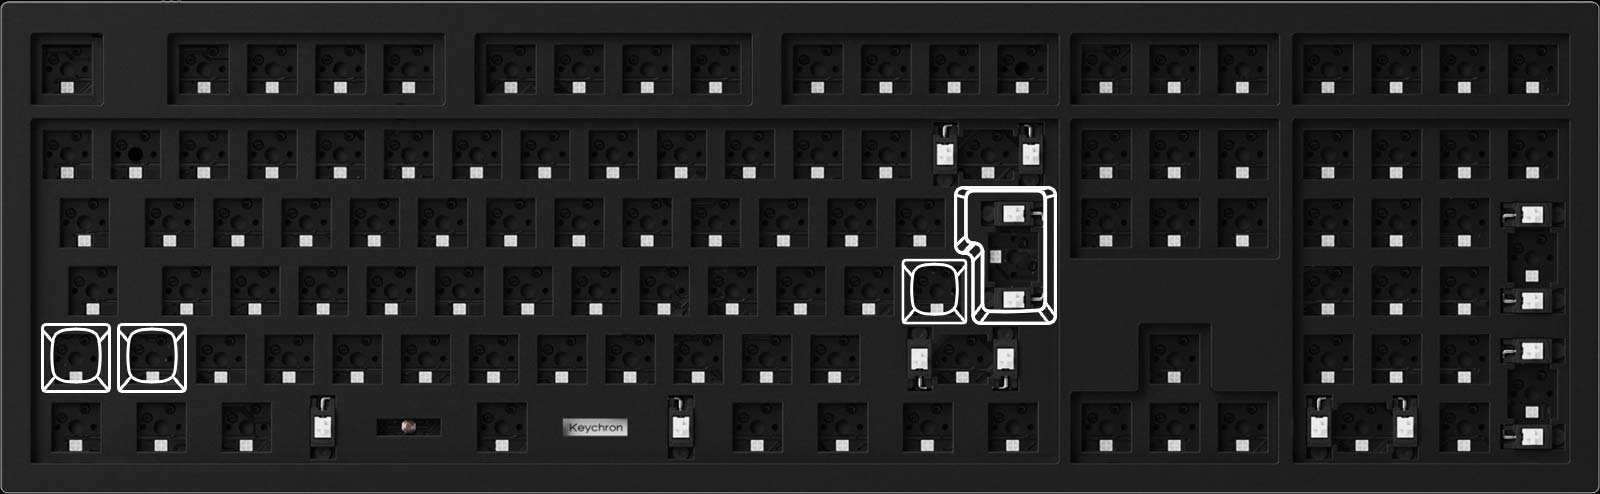 Keychron Q6 ISO Layout 100% Custom Mechanical Keyboard